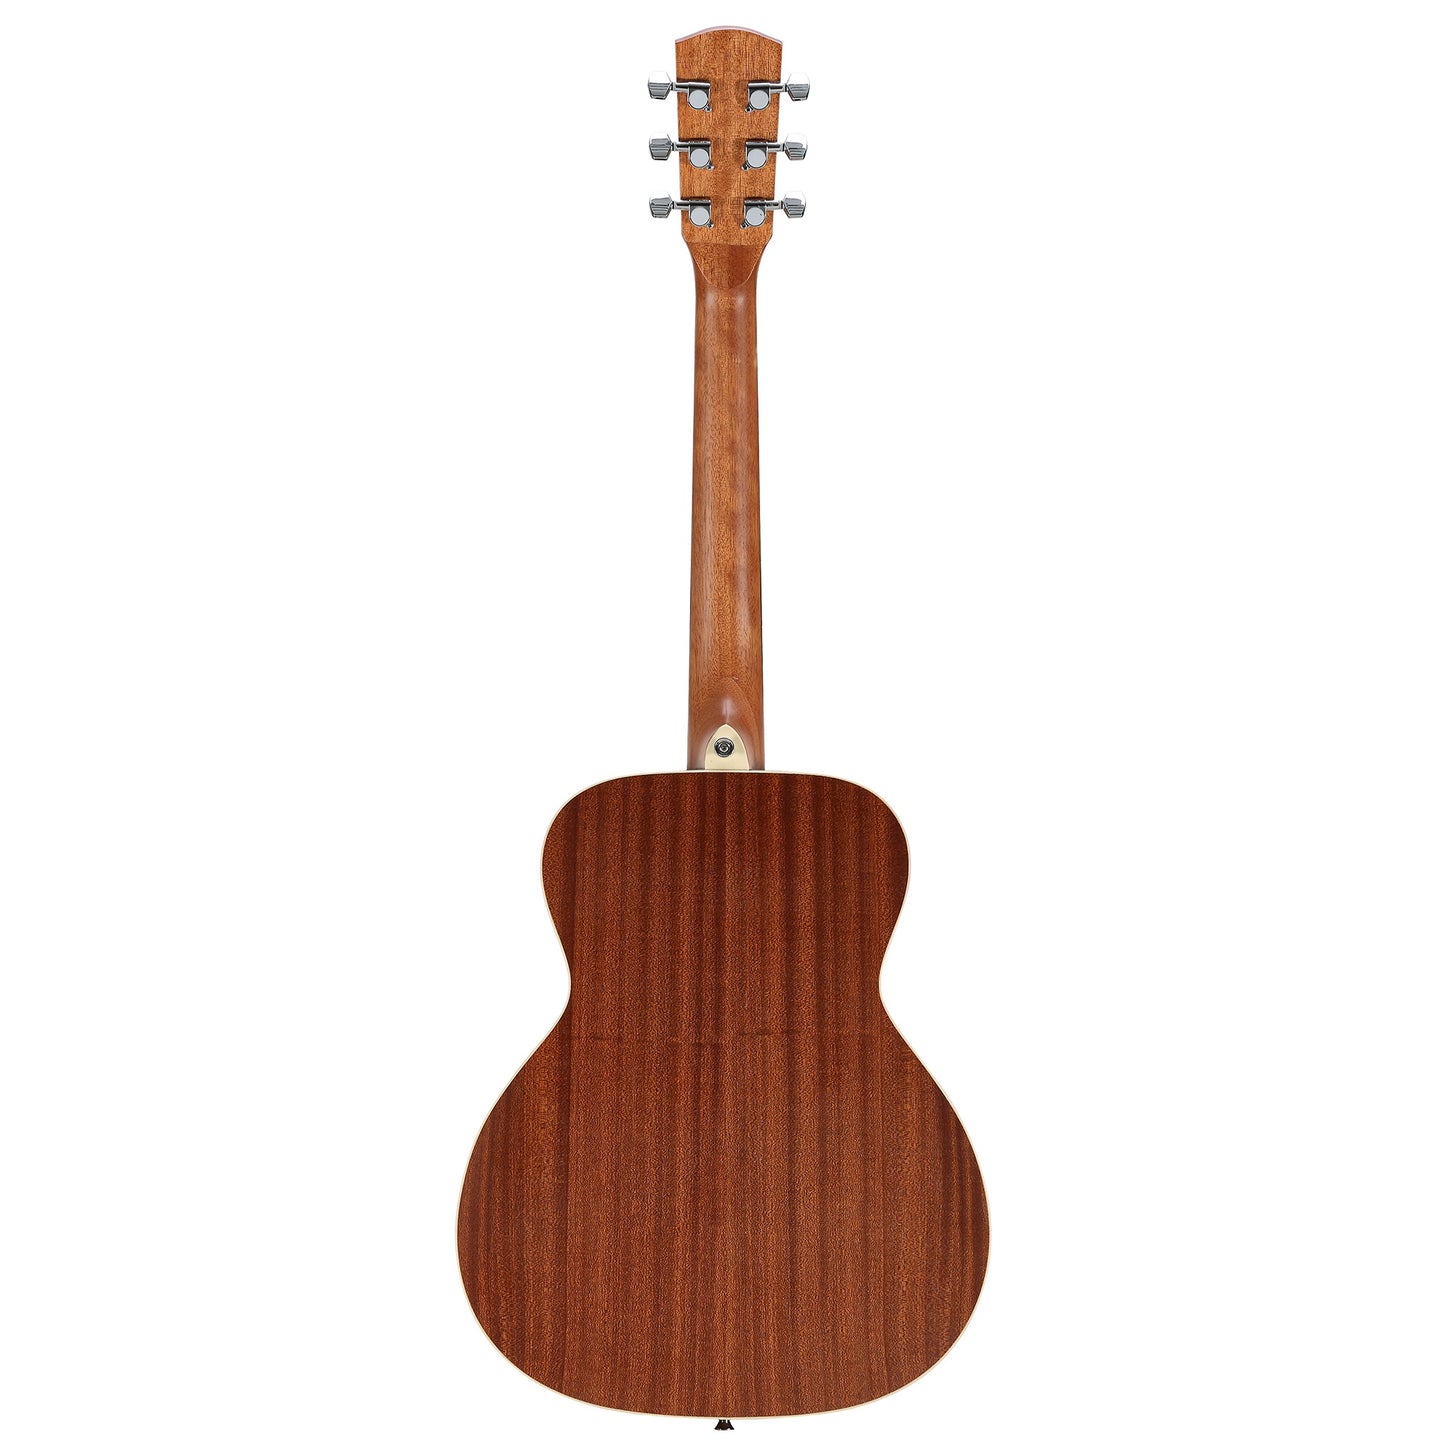 Alvarez RS26 Short Scale Steel String Guitar w/bag